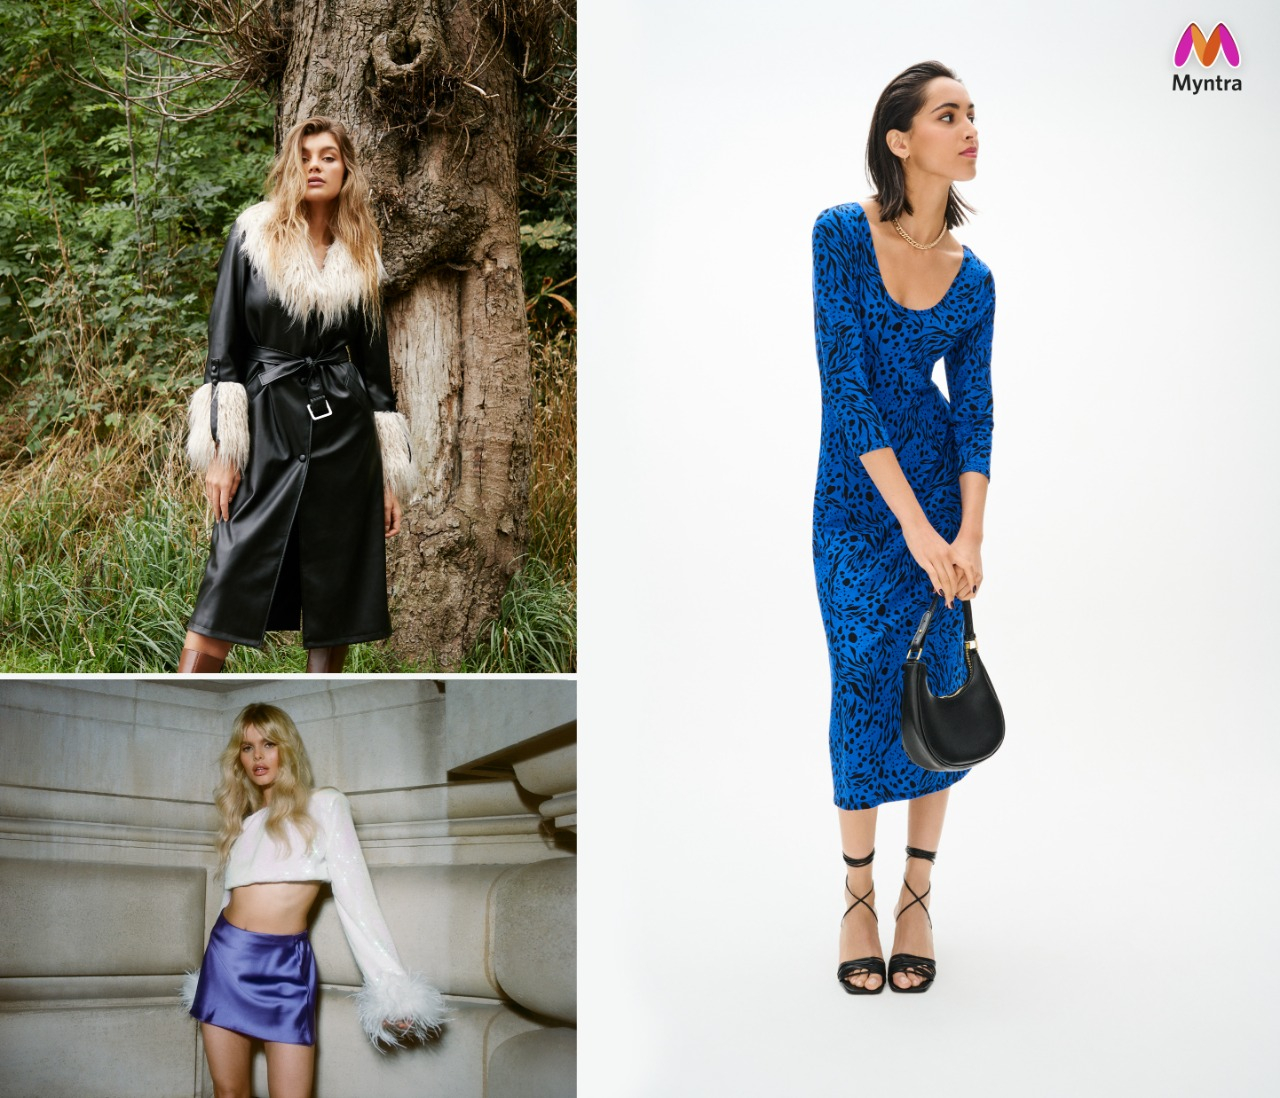 Sheath Dresses - Choose from Classy Sheath Dresses Online at Myntra